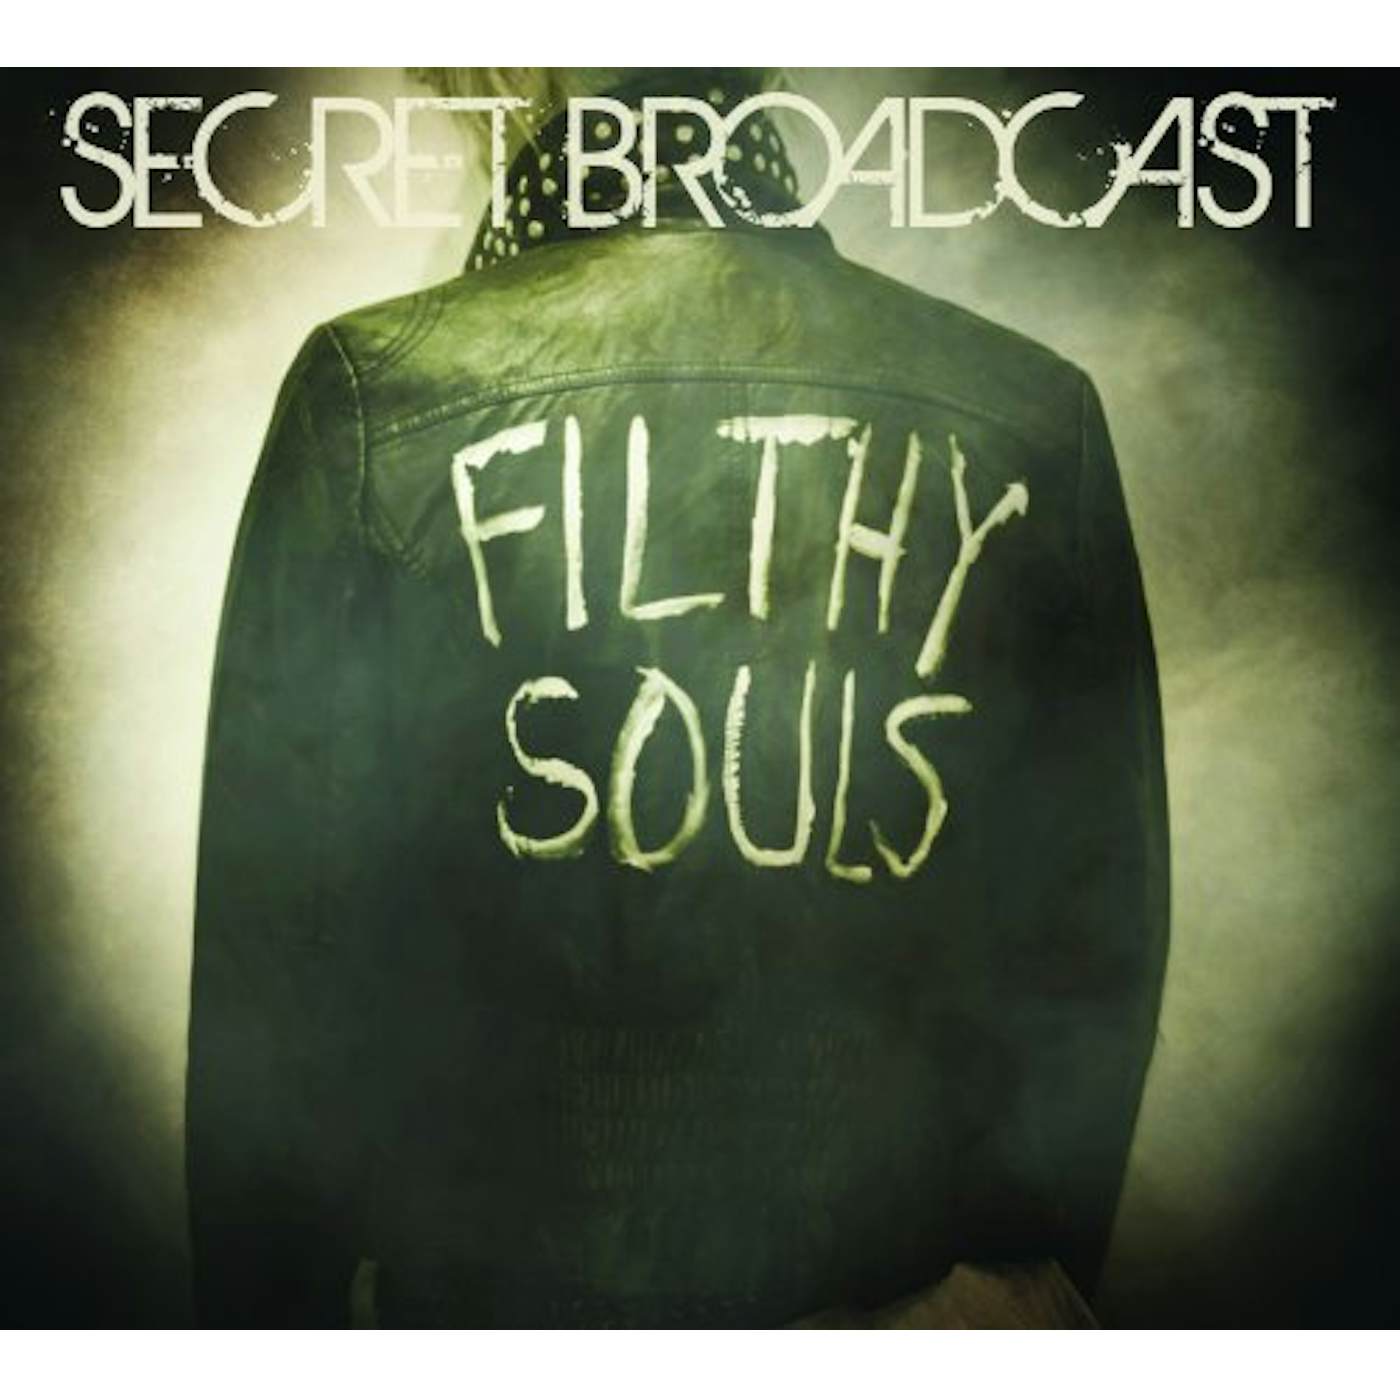 Secret Broadcast FILTHY SOULS CD